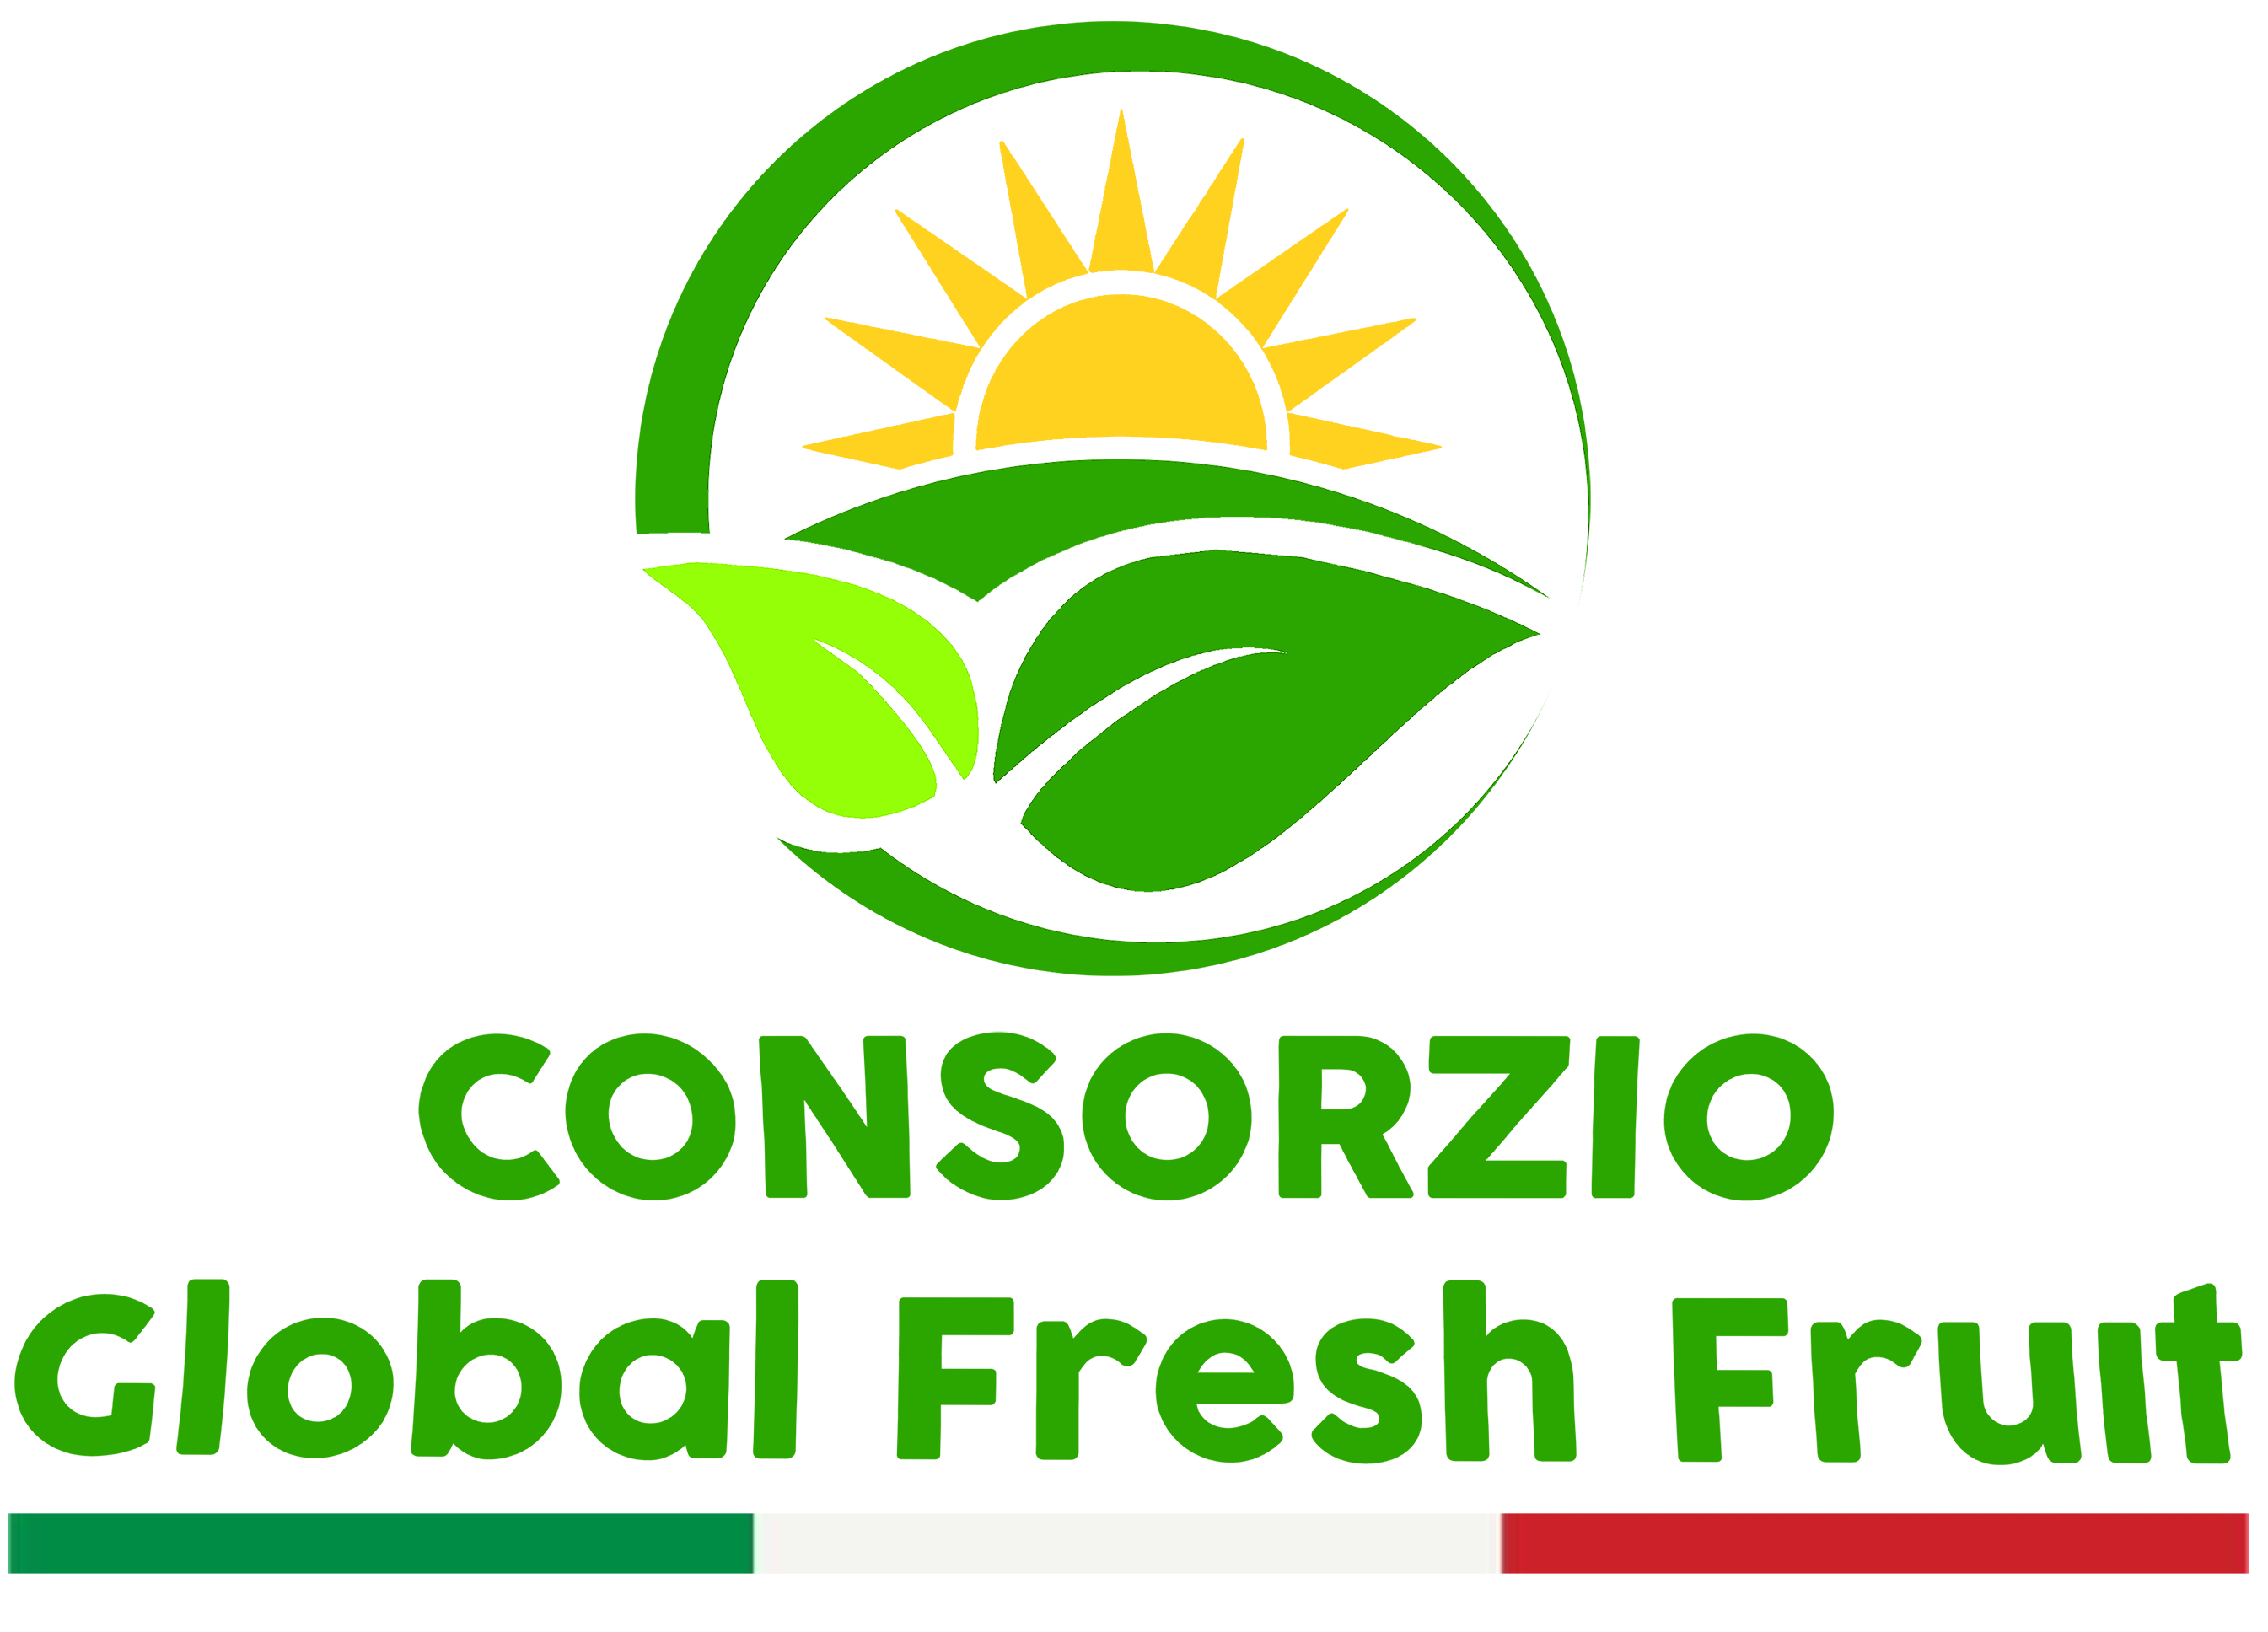 Global Fresh Fruit